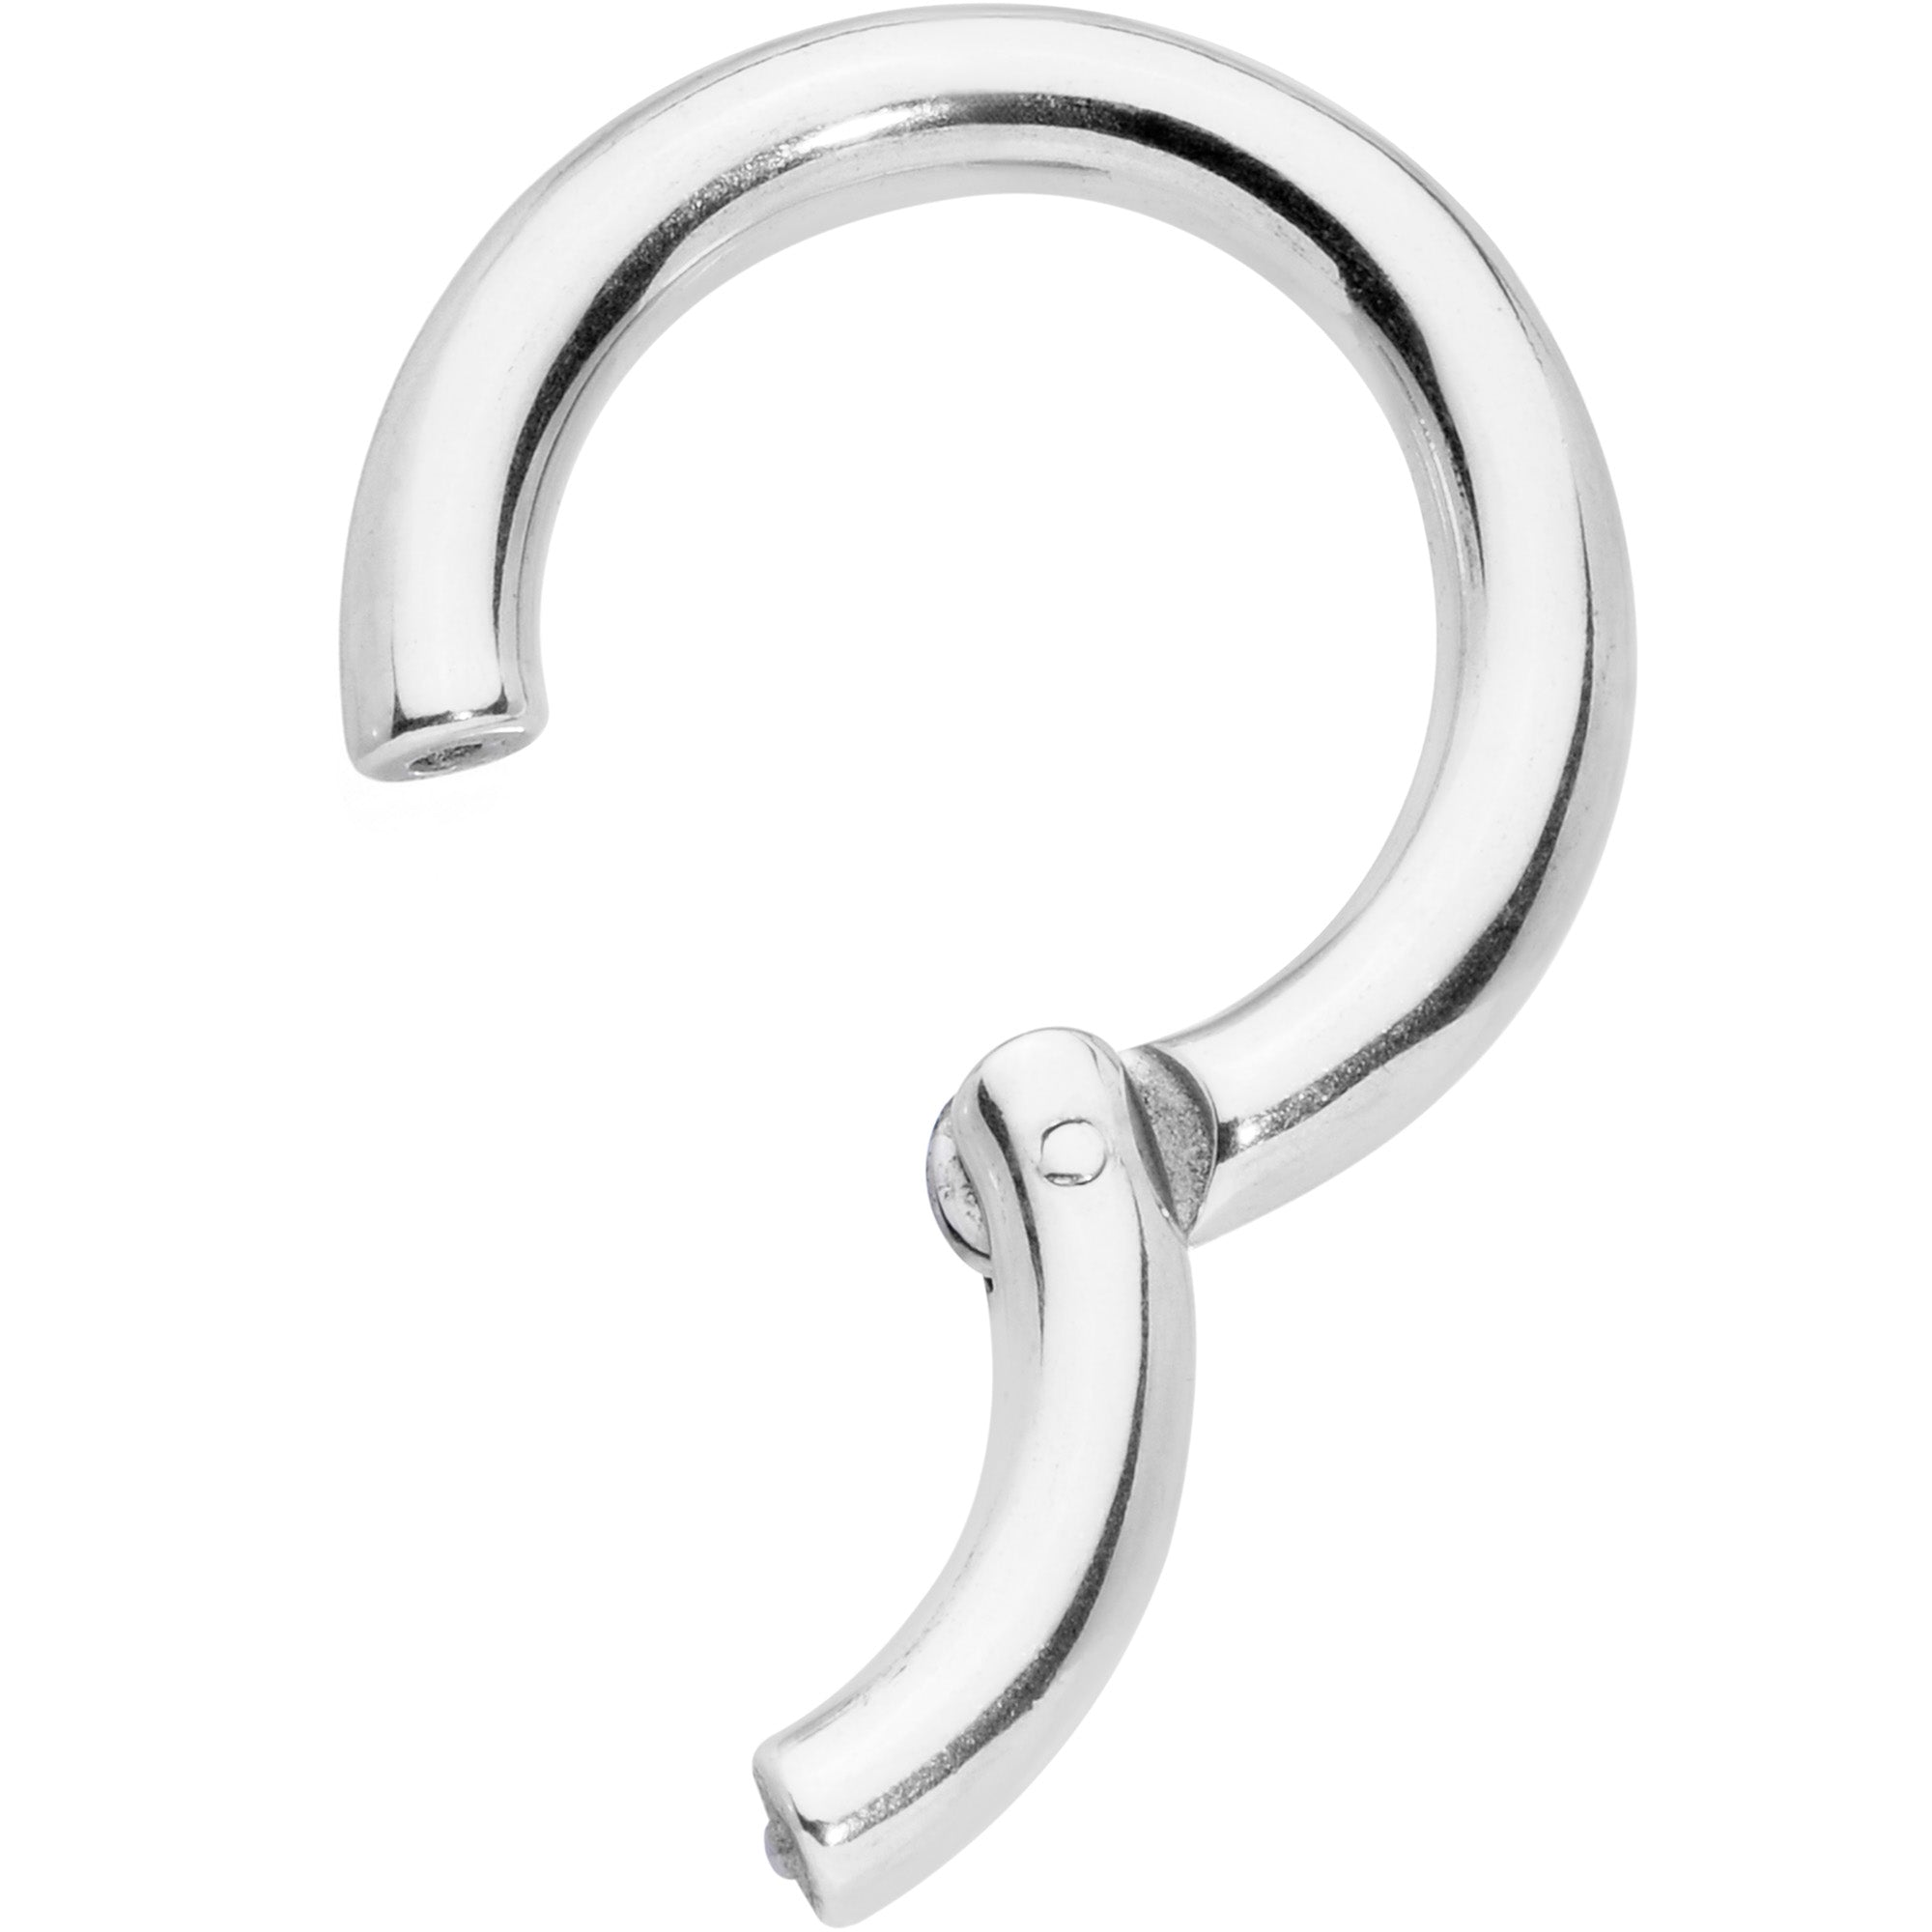 8 Gauge 9/16 Stainless Steel Hinged Segment Ring